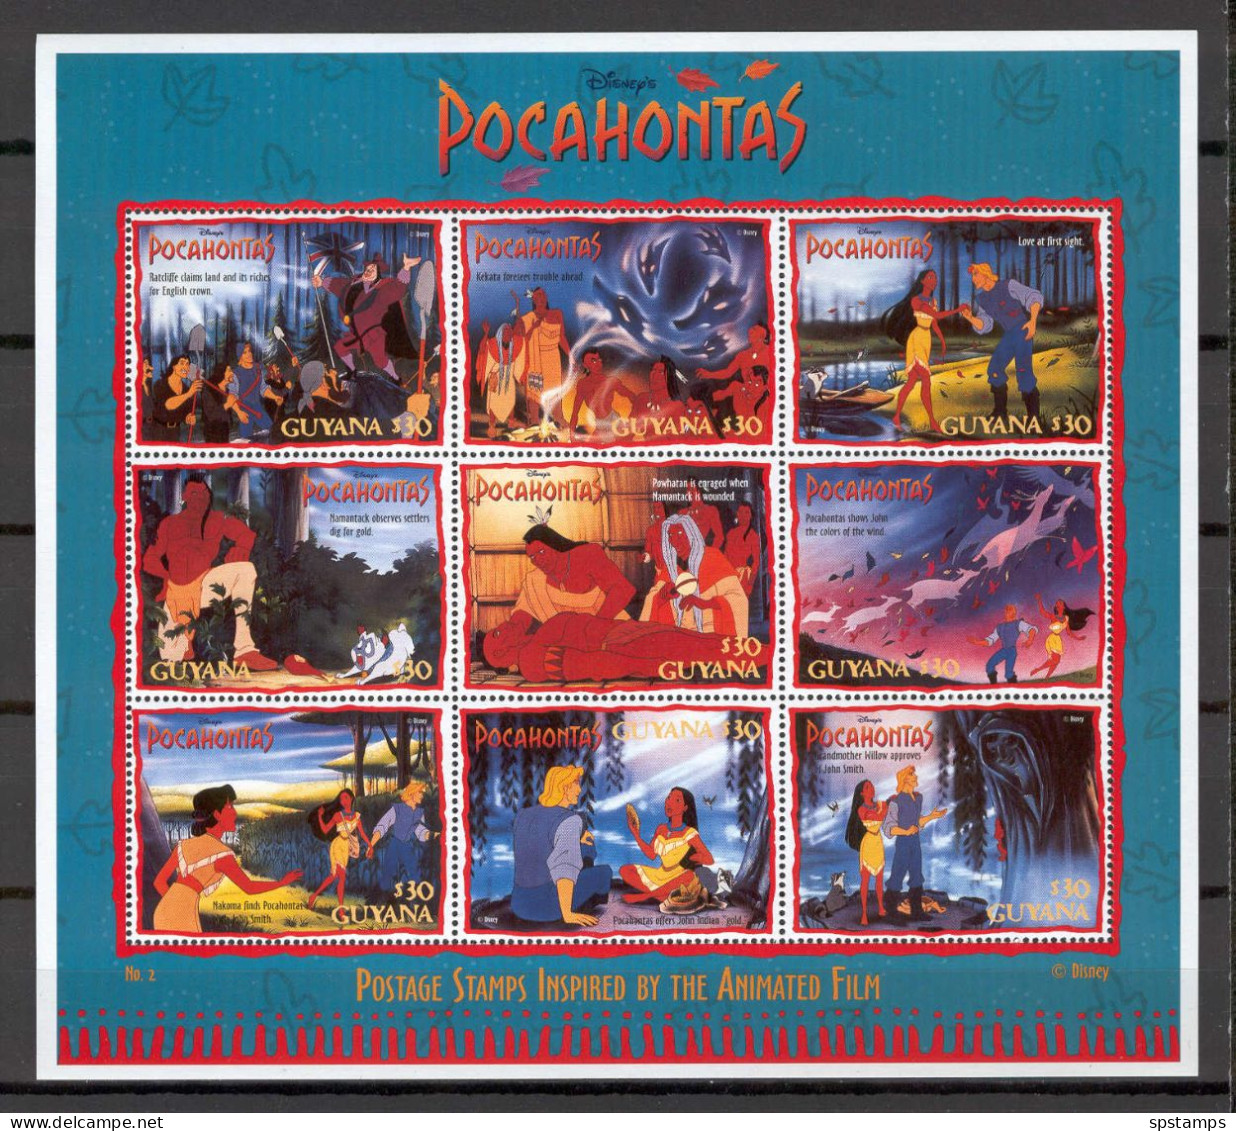 Disney Guyana 1995 Pocahontas Sheetlet #3 MNH - Disney